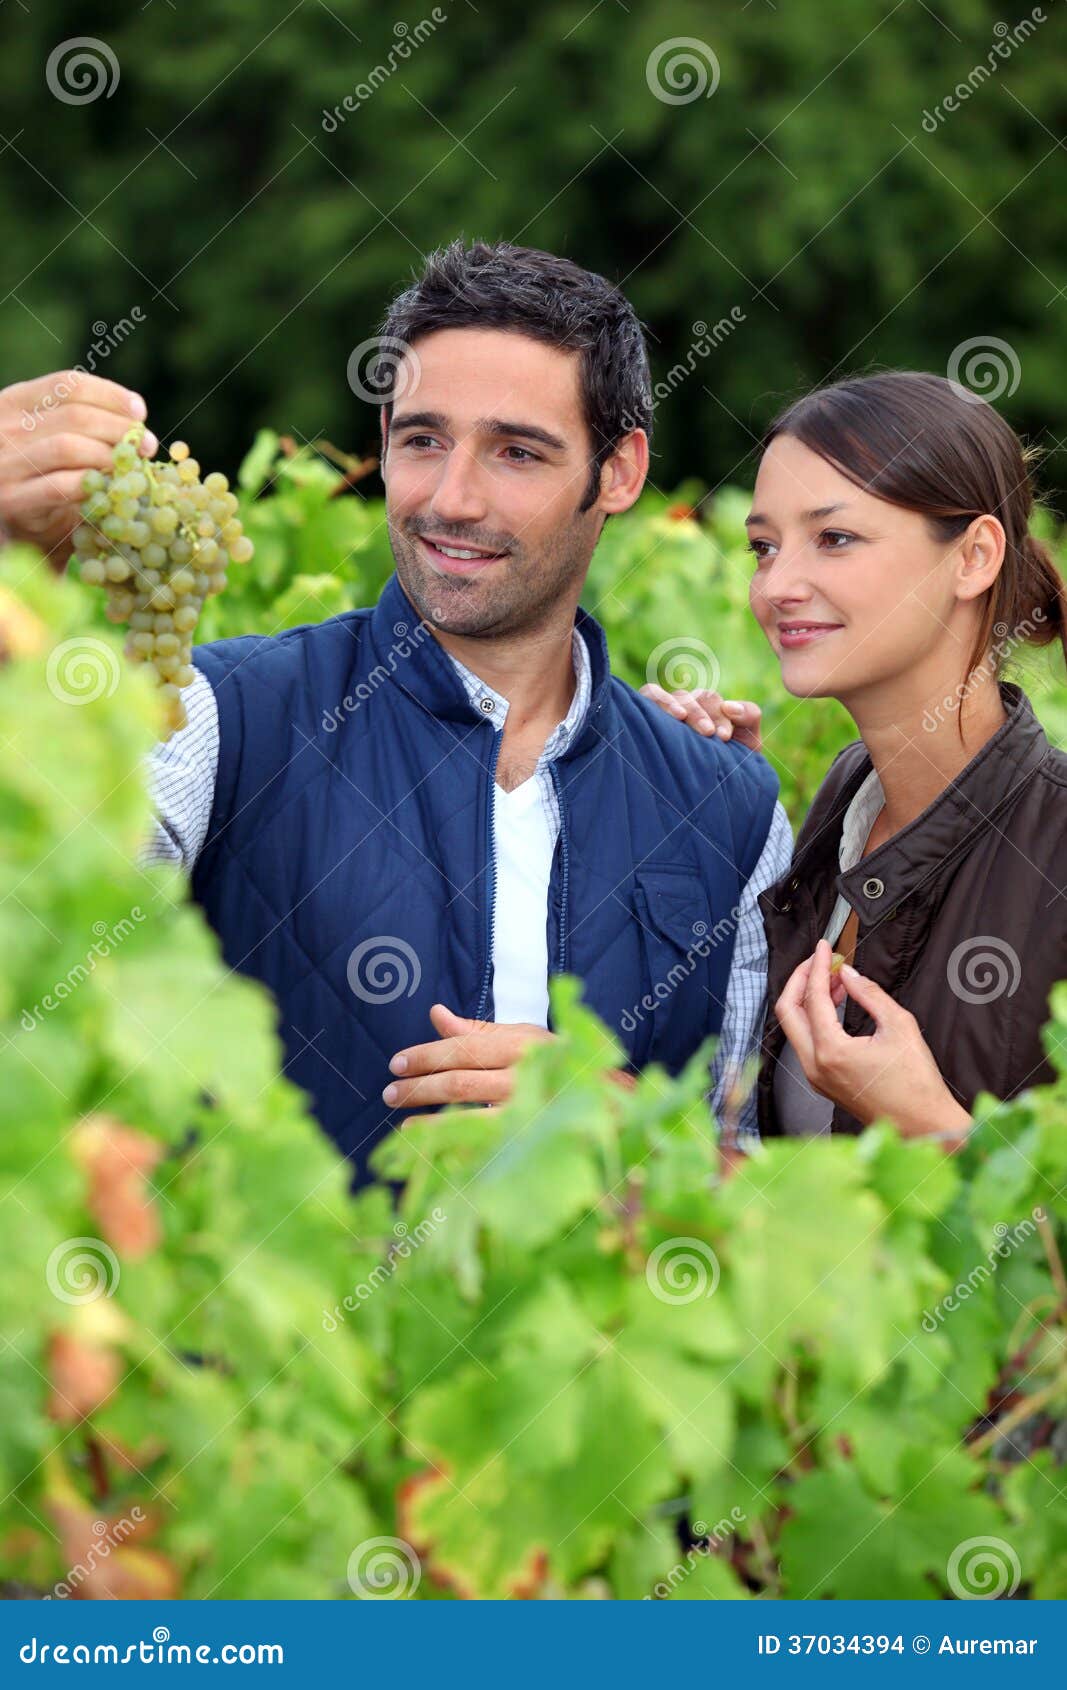 grape growers